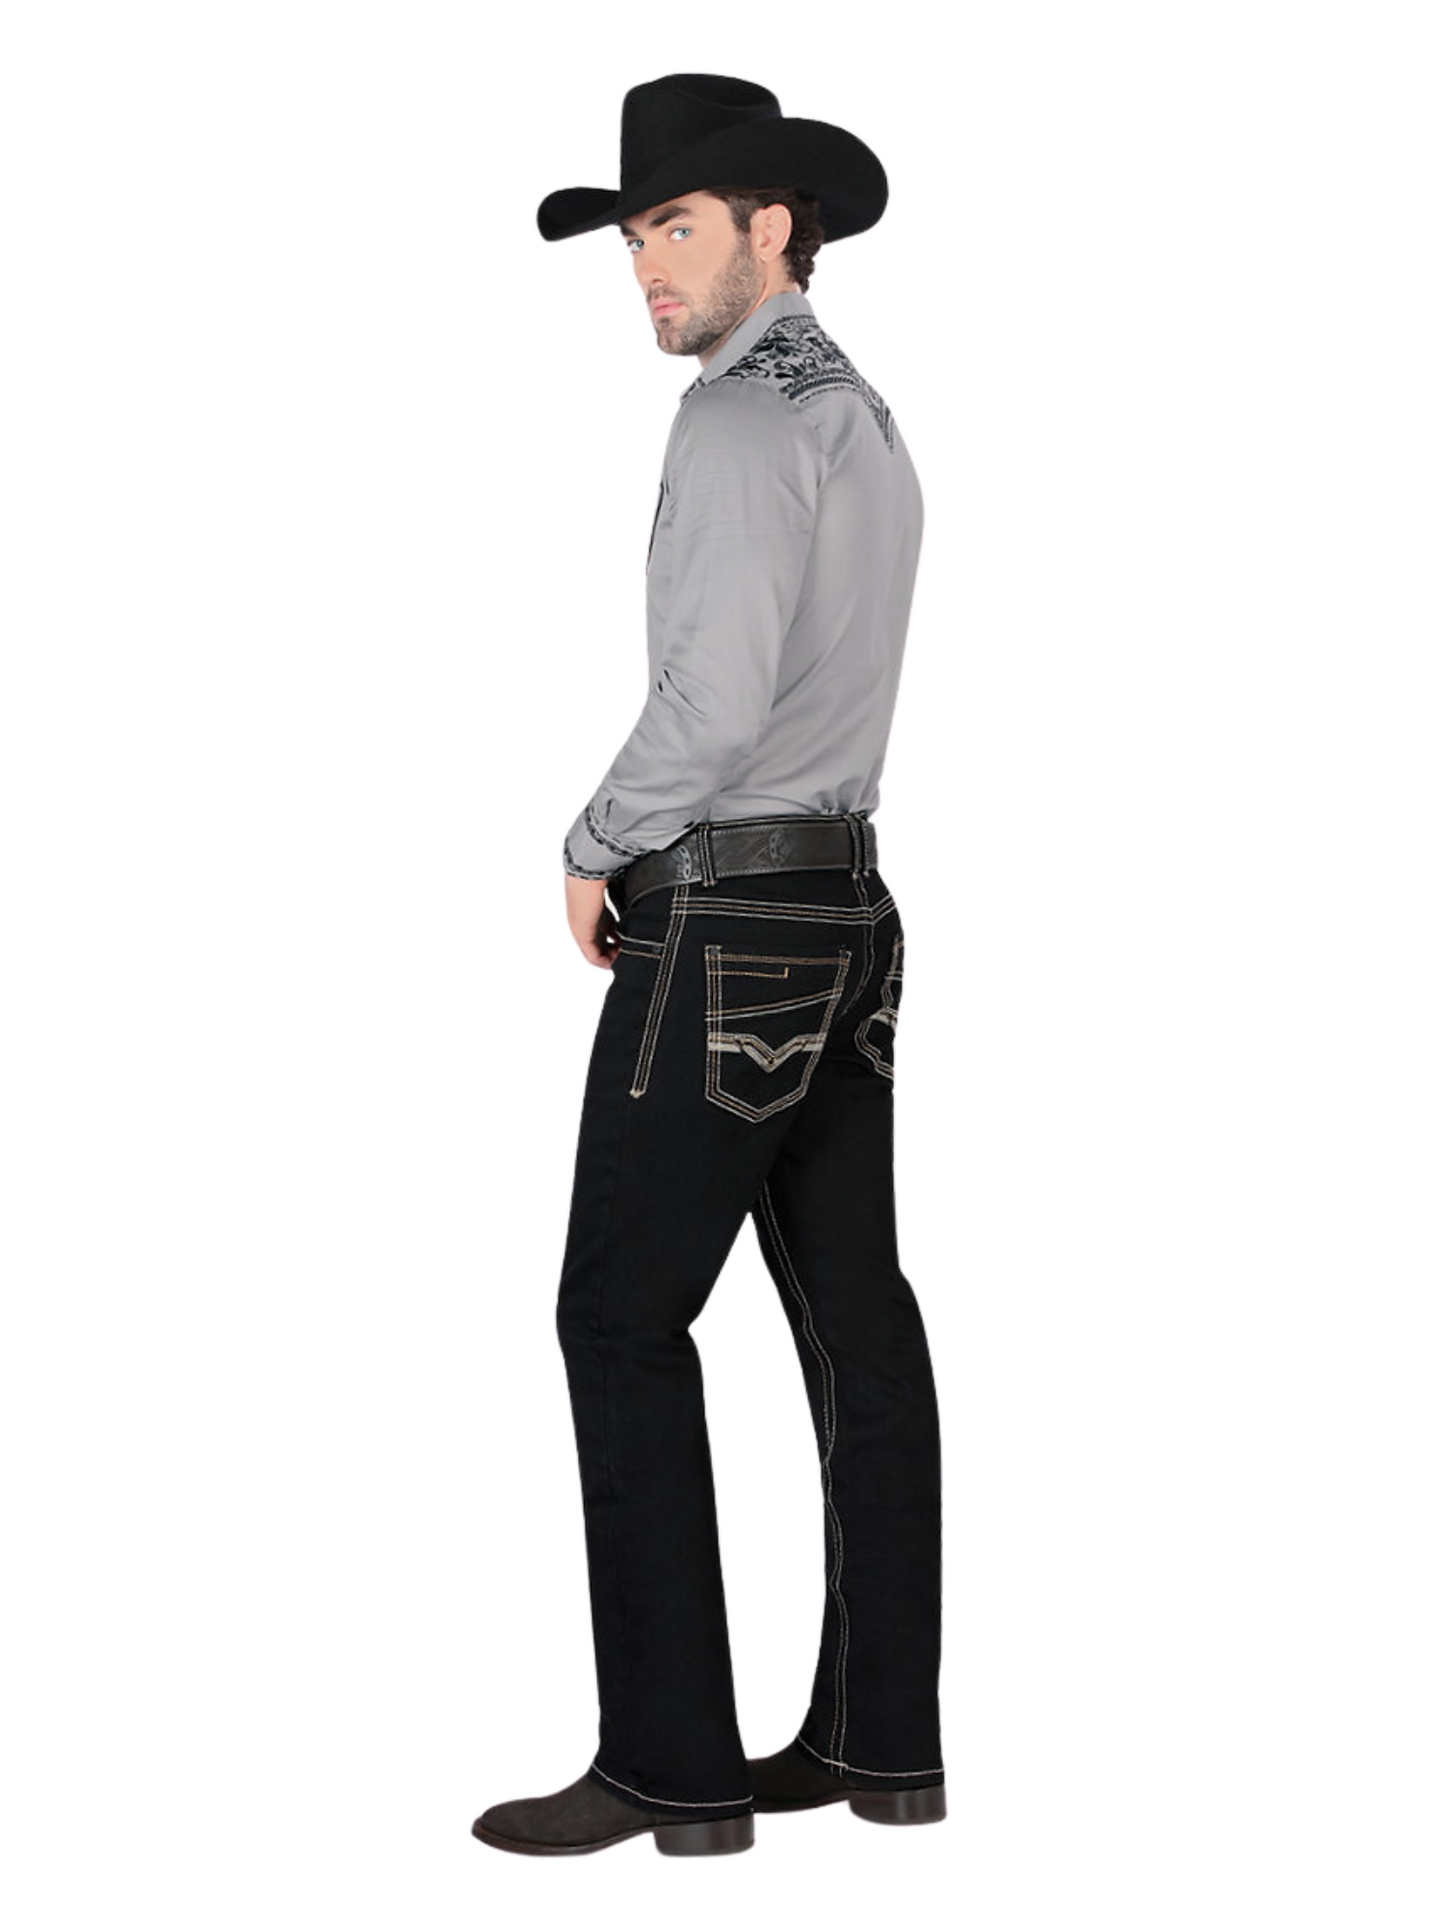 Stretch Denim Jeans for Men 'Montero' - ID: 4604 Denim Jeans Montero